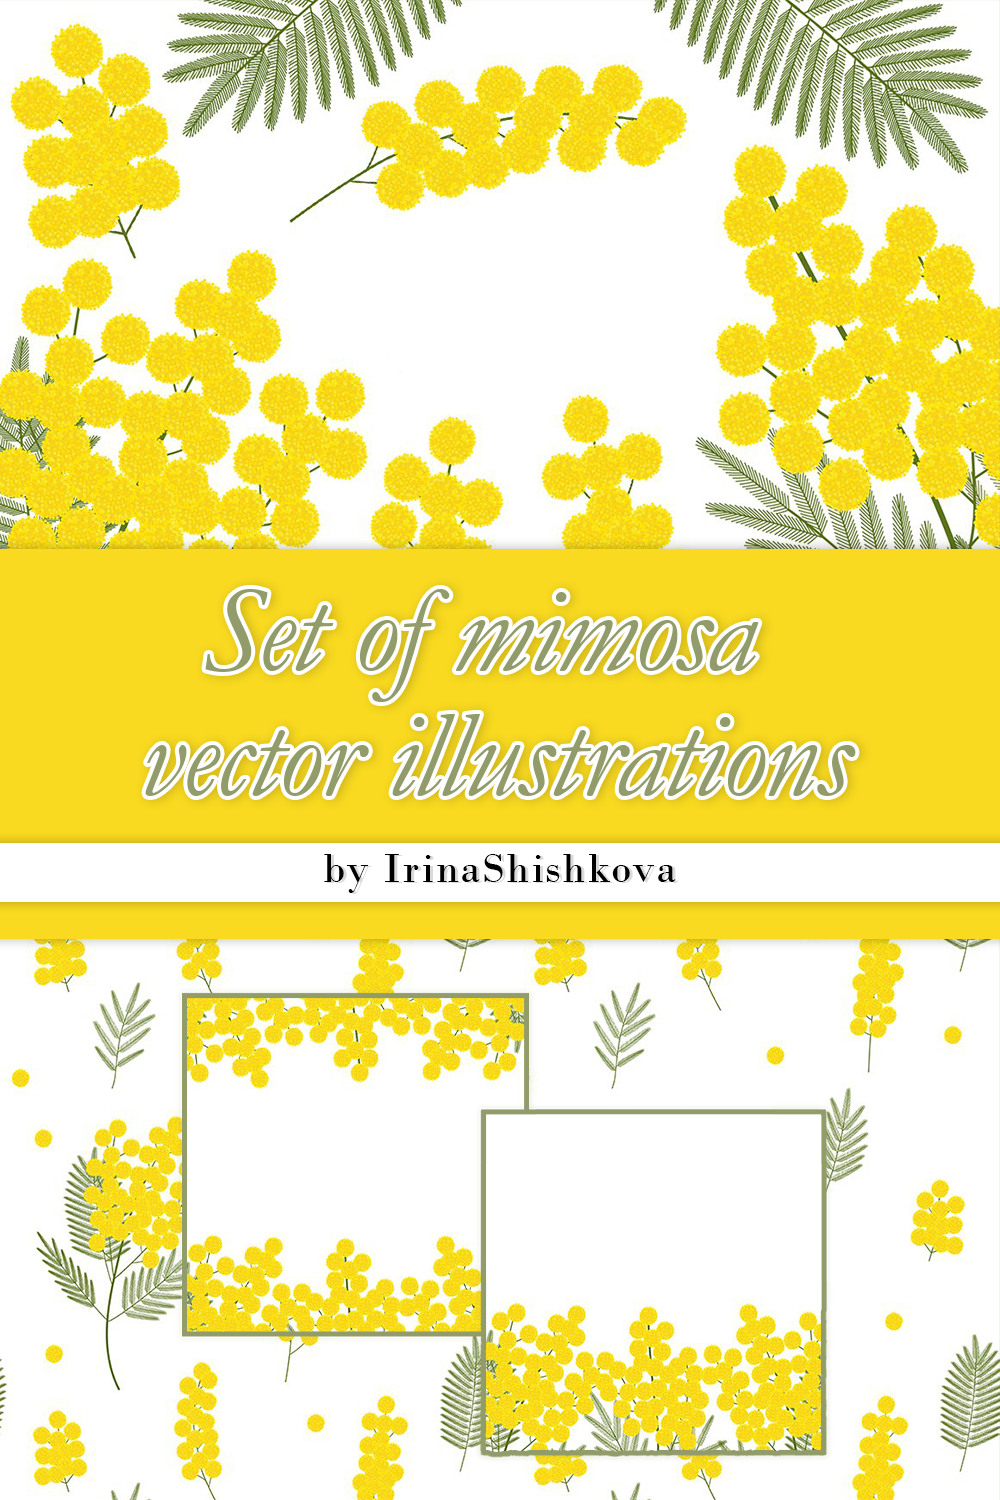 Set of mimosa vector illustrations of pinterest.